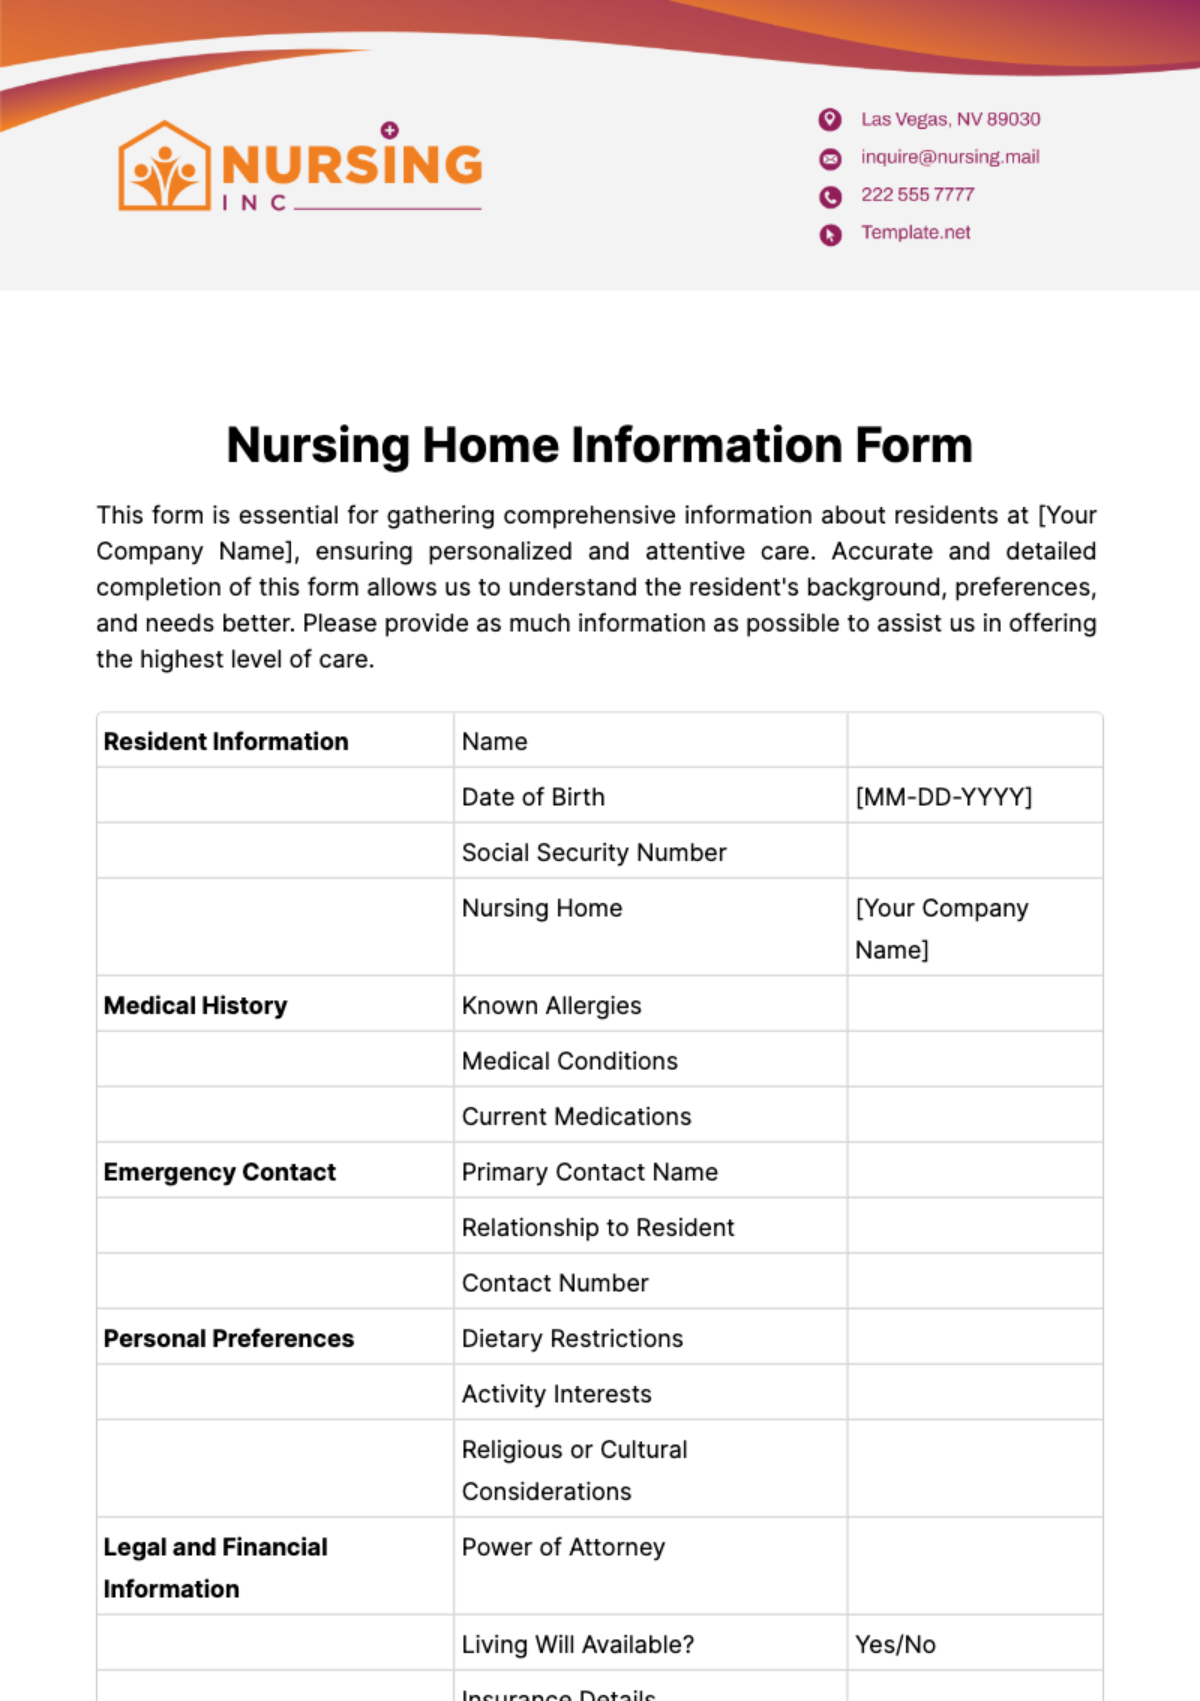 Nursing Home Information Form Template